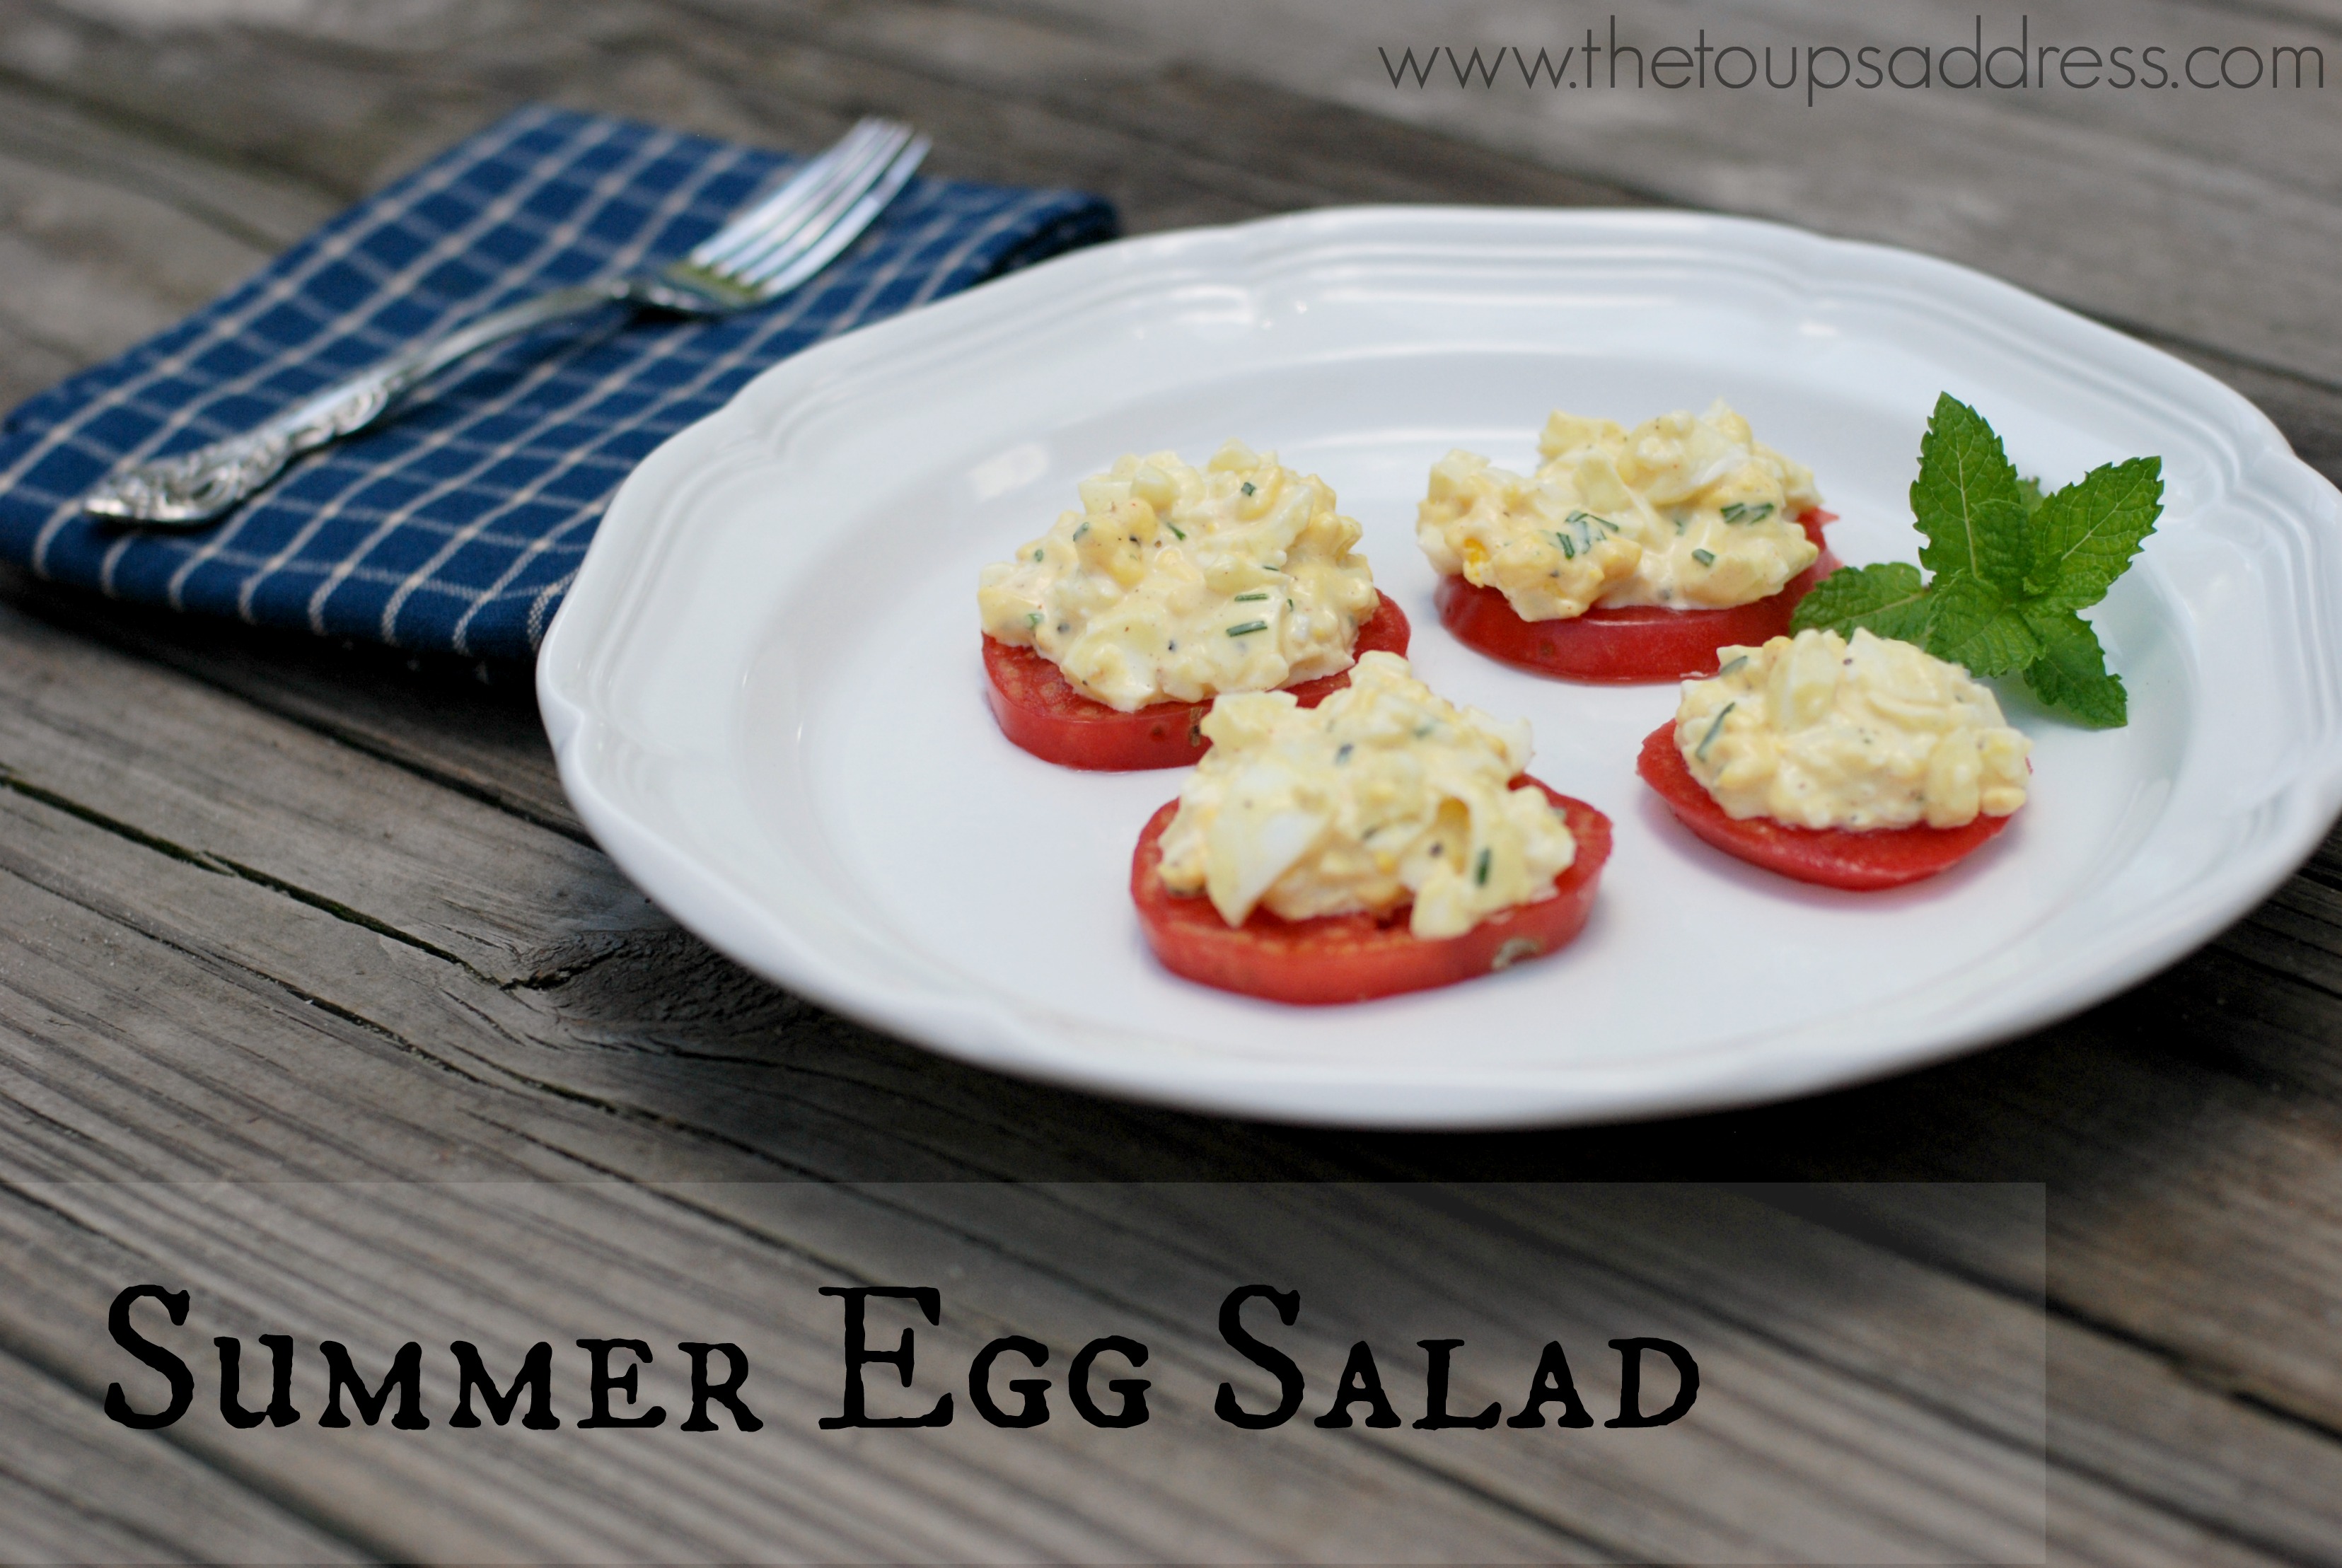 Summer Egg Salad - The Toups Address